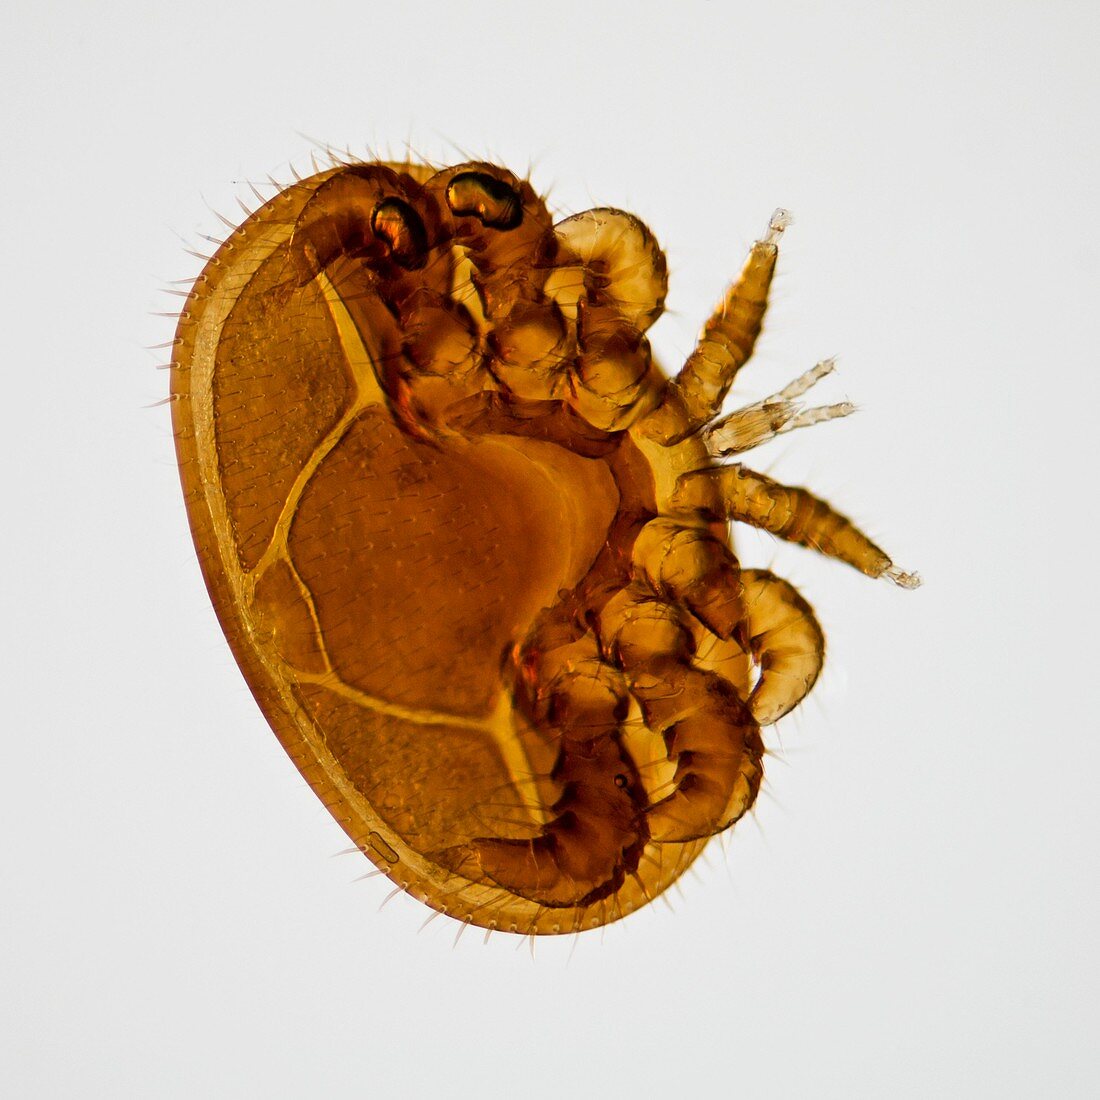 Honey bee mite,light micrograph